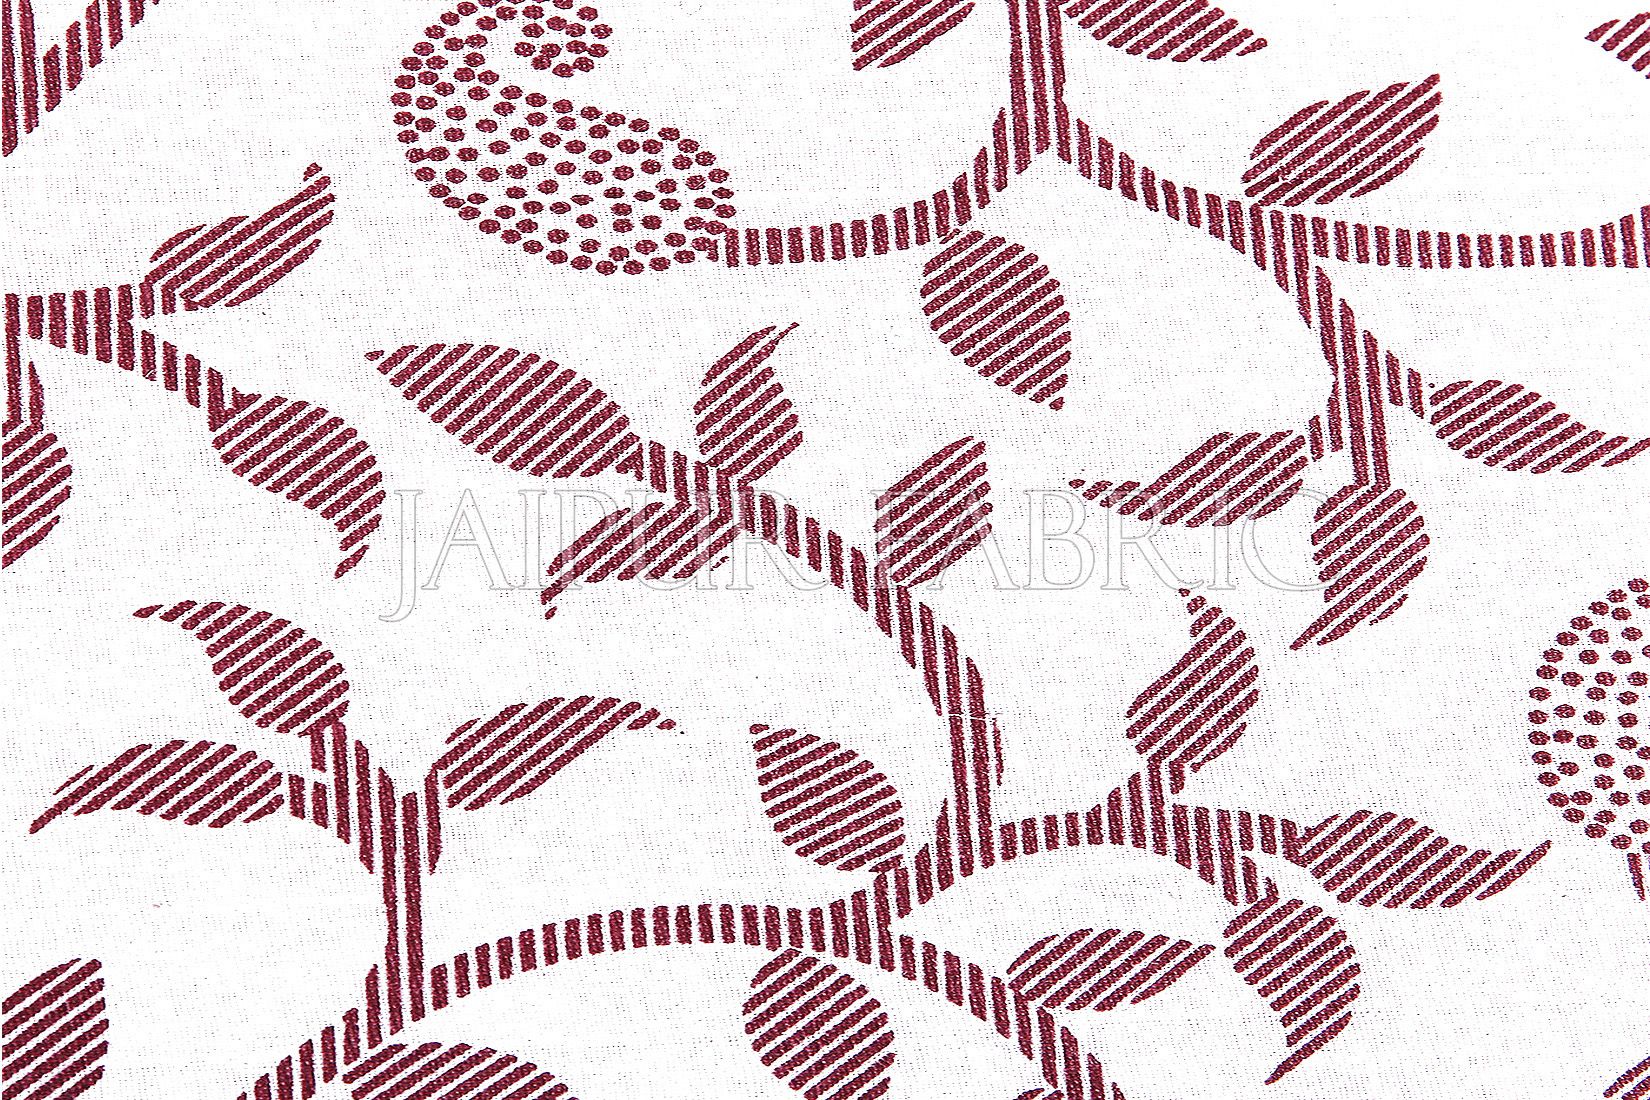 Brown Polka Dots Border and Leaf Print Cotton Diwan Set